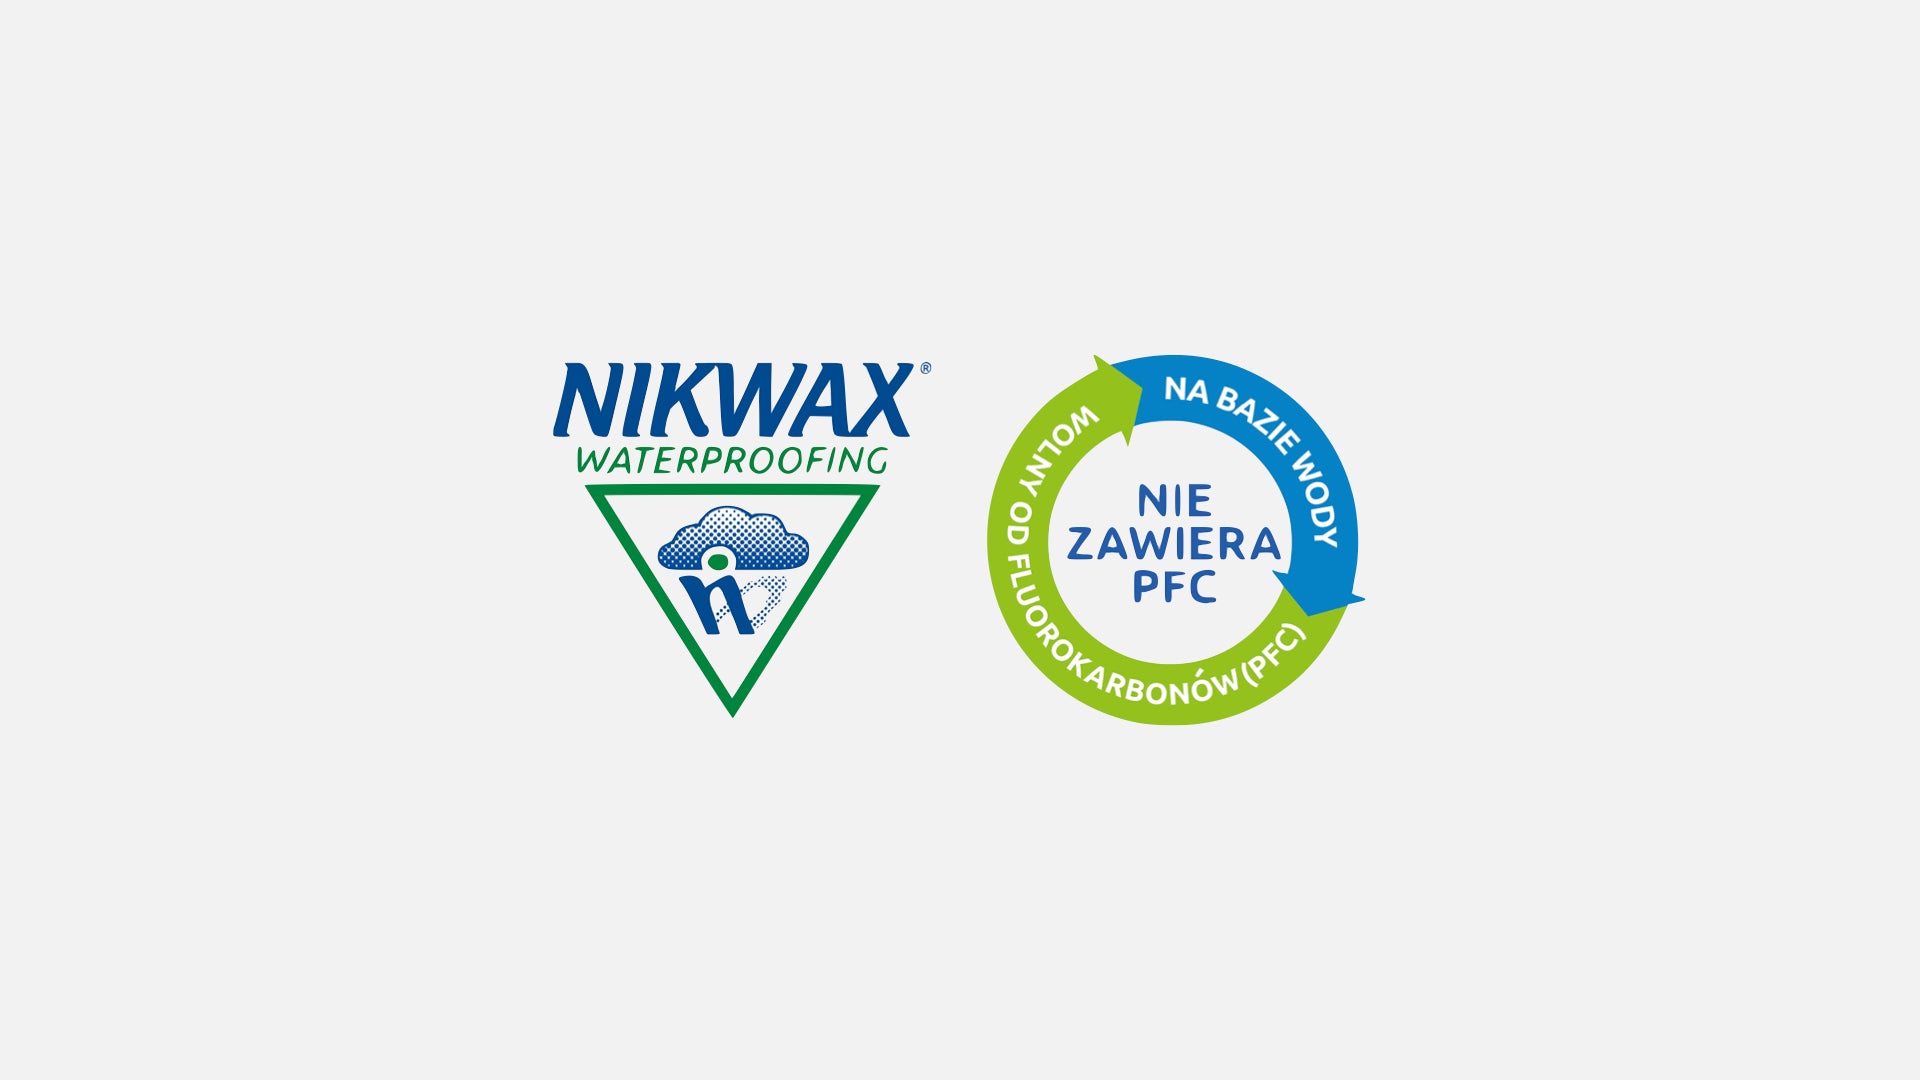 Nikwax - TX.Direct® Wash-In garment impregnation agent 300ml